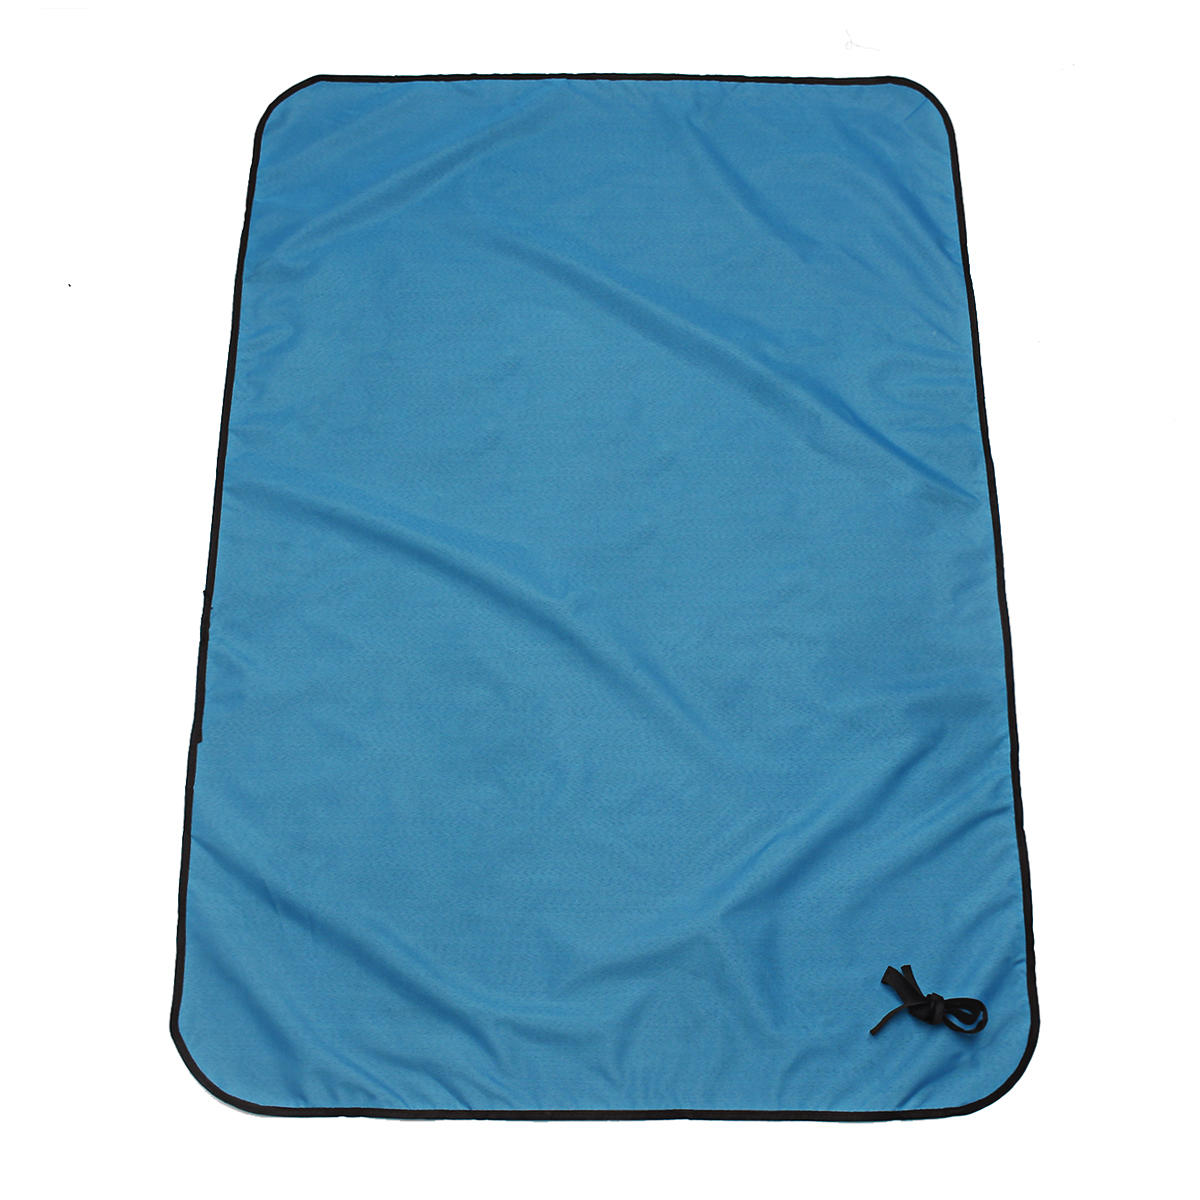 200x150cm Picnic Mat Sleeping Blanket Outdoor Camping Travel Waterproof Beach Pad 